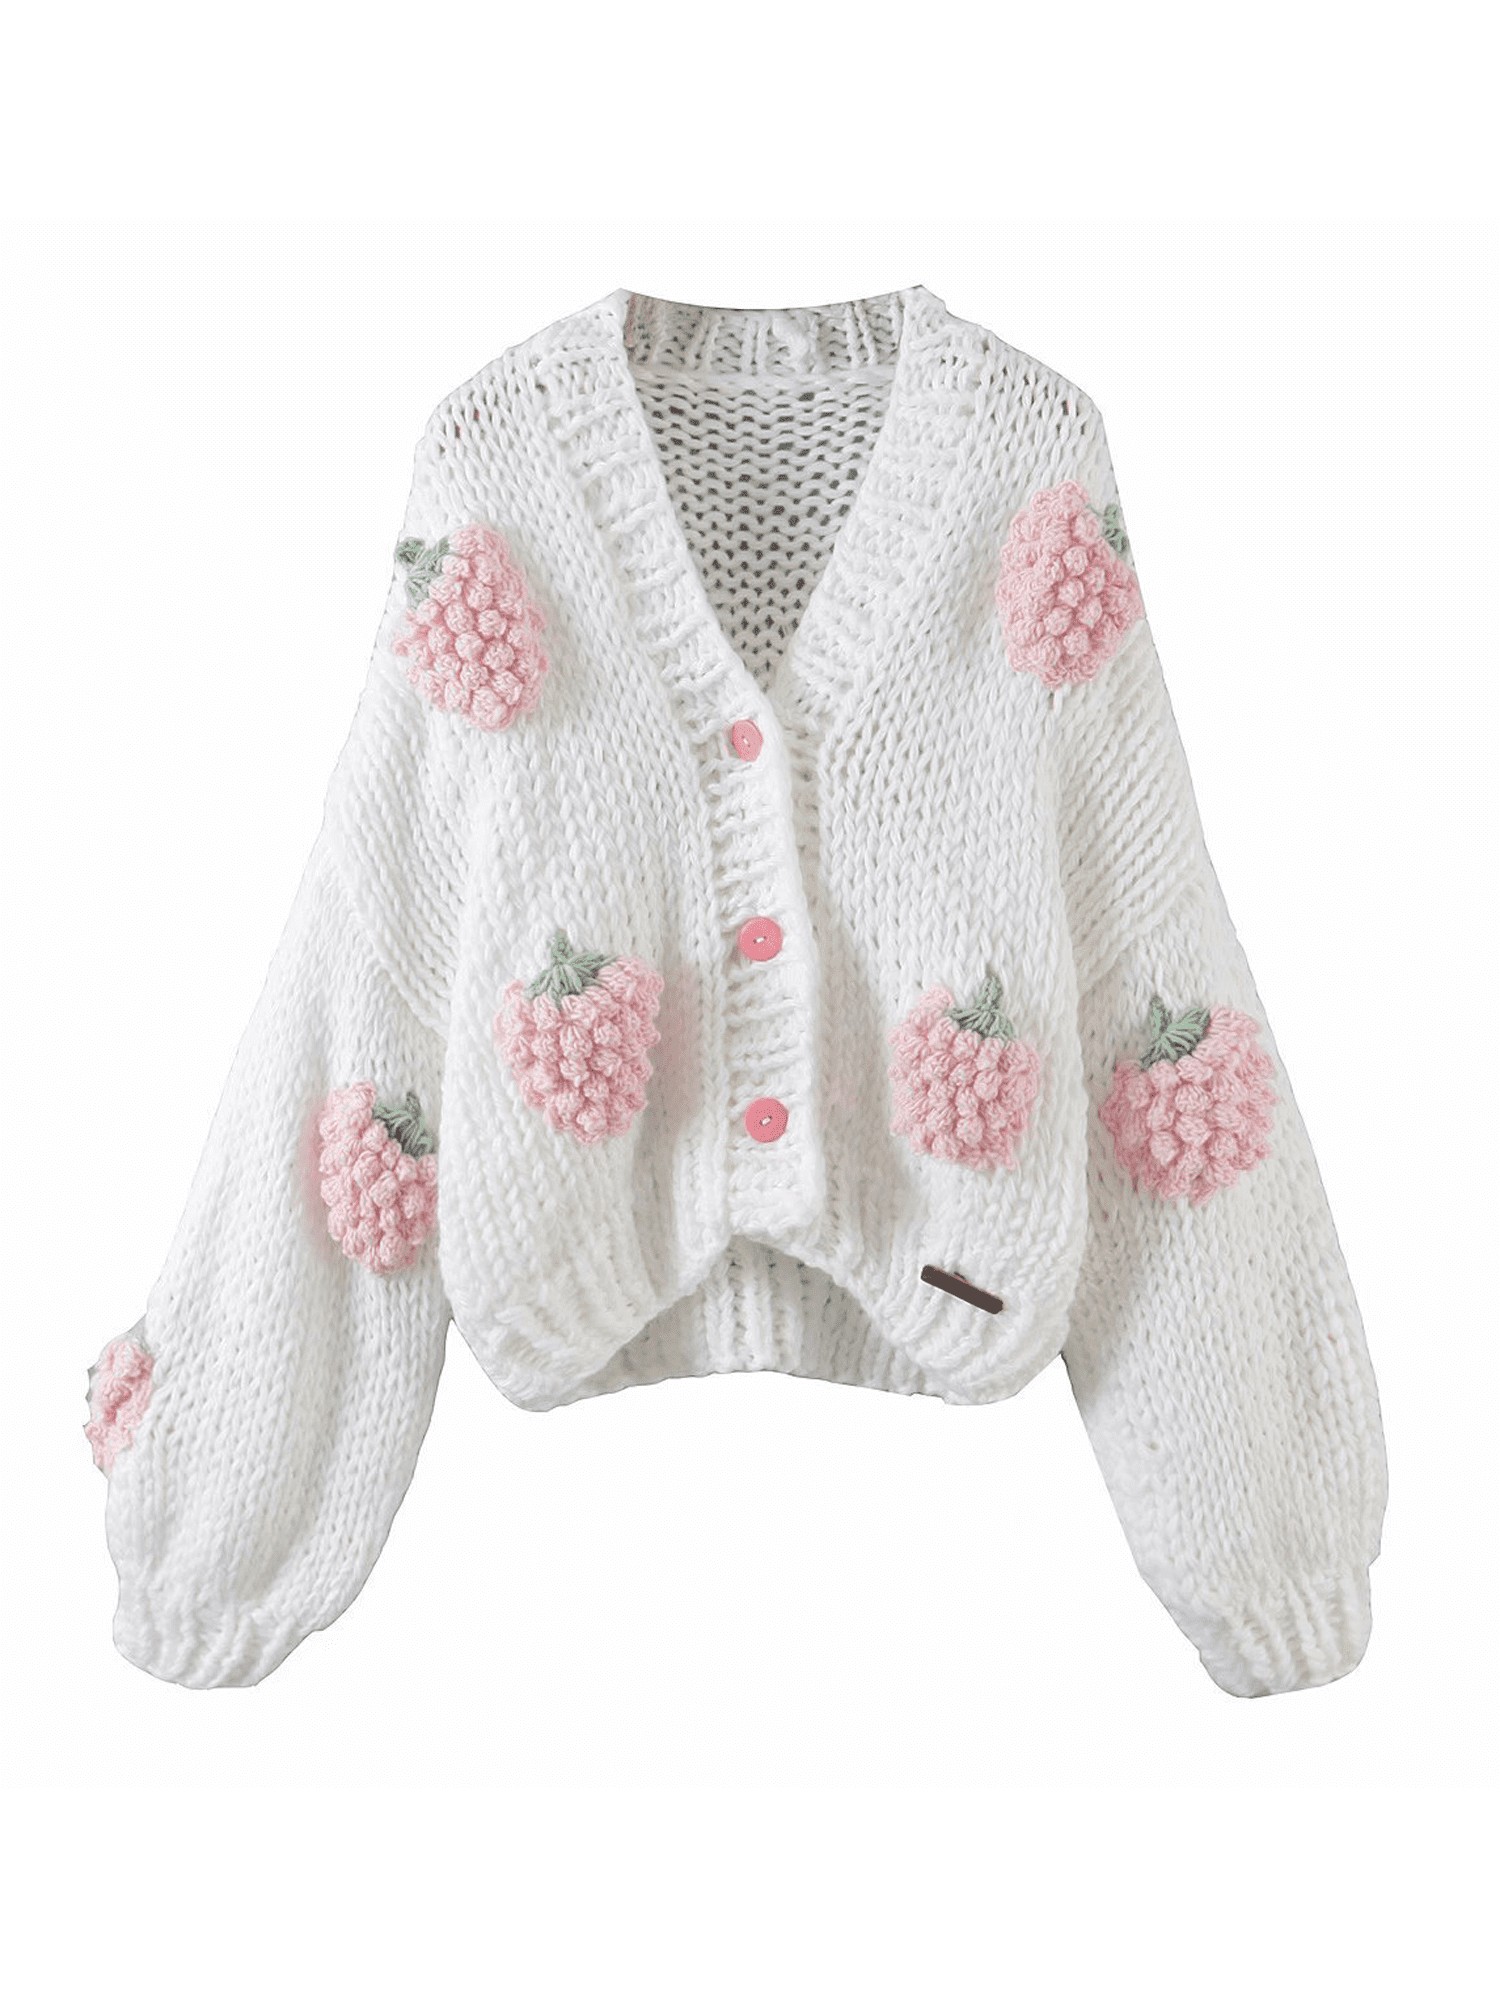 Chunky Floral Cardigan Hand Knit Cardigan Crop Cardigan Pink Cardigan Flower Cardigan